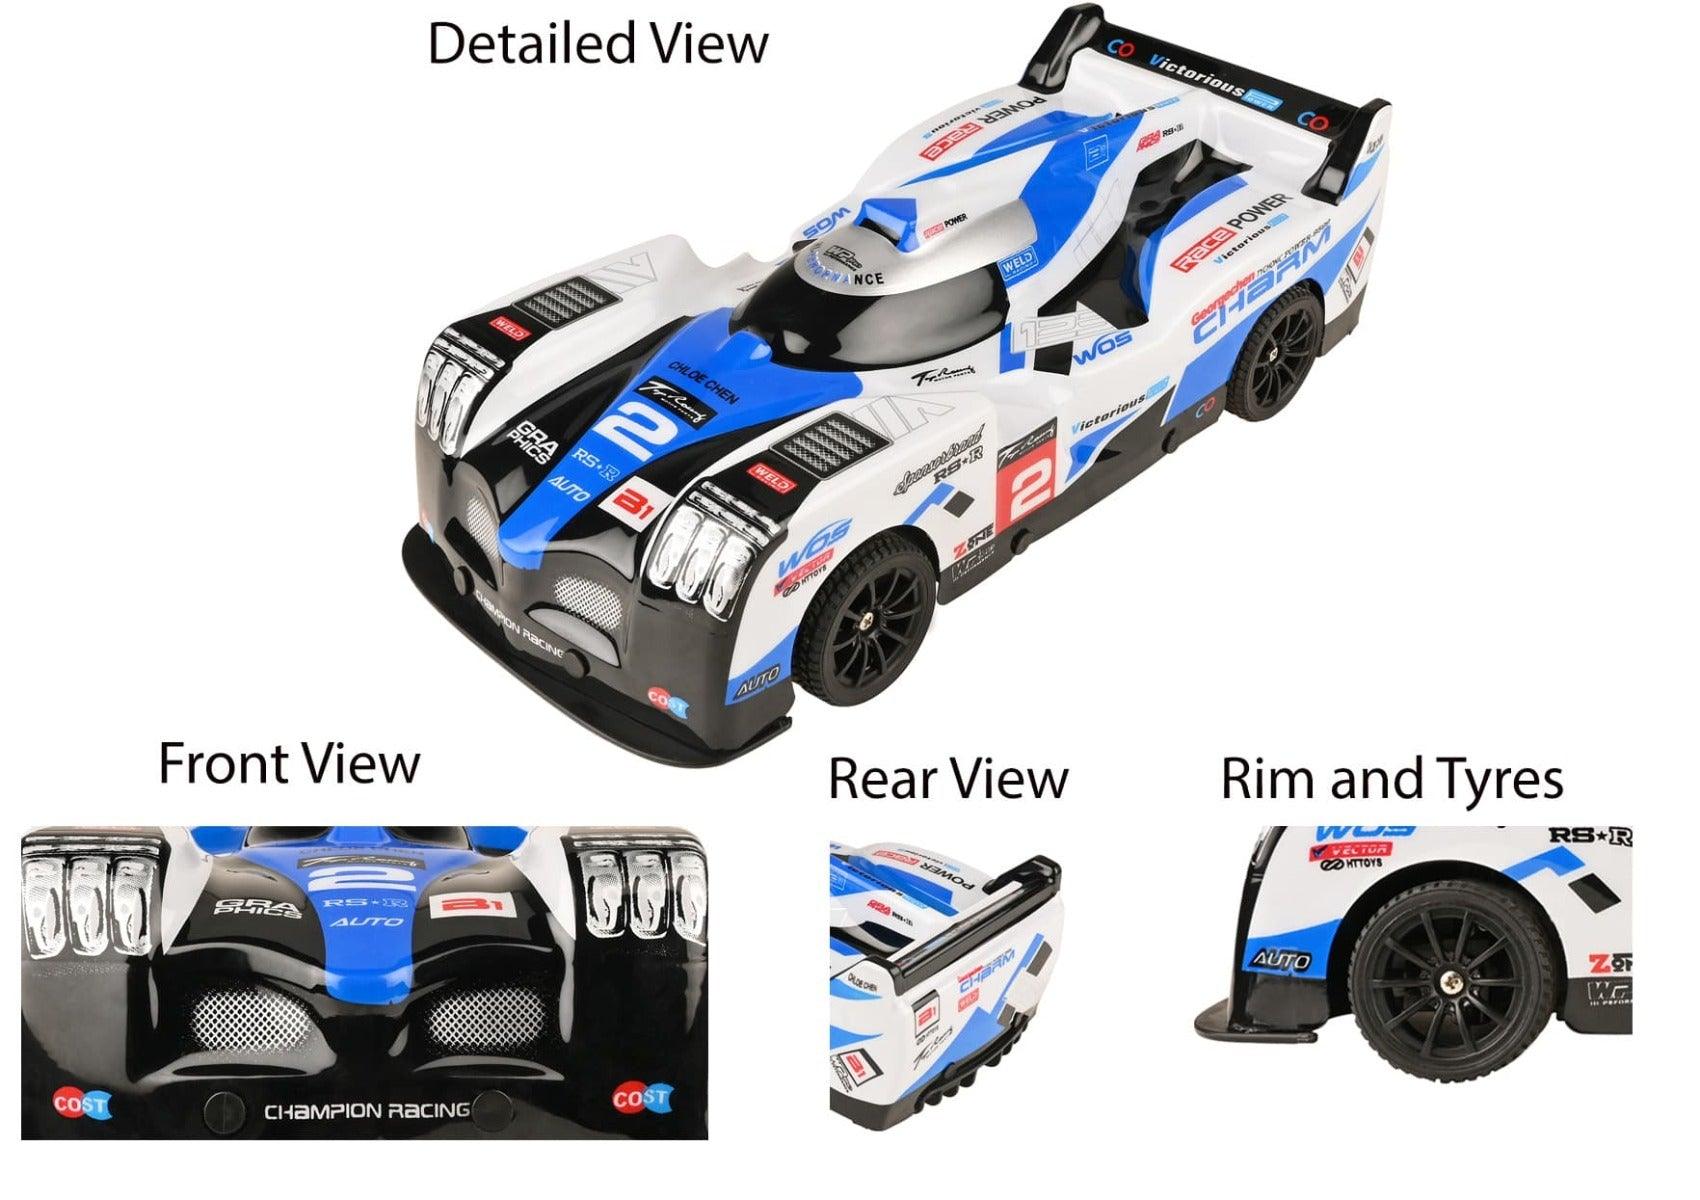 Playzu Auto Racing 1:14 Scale R/C Car - Blue for Ages 6+